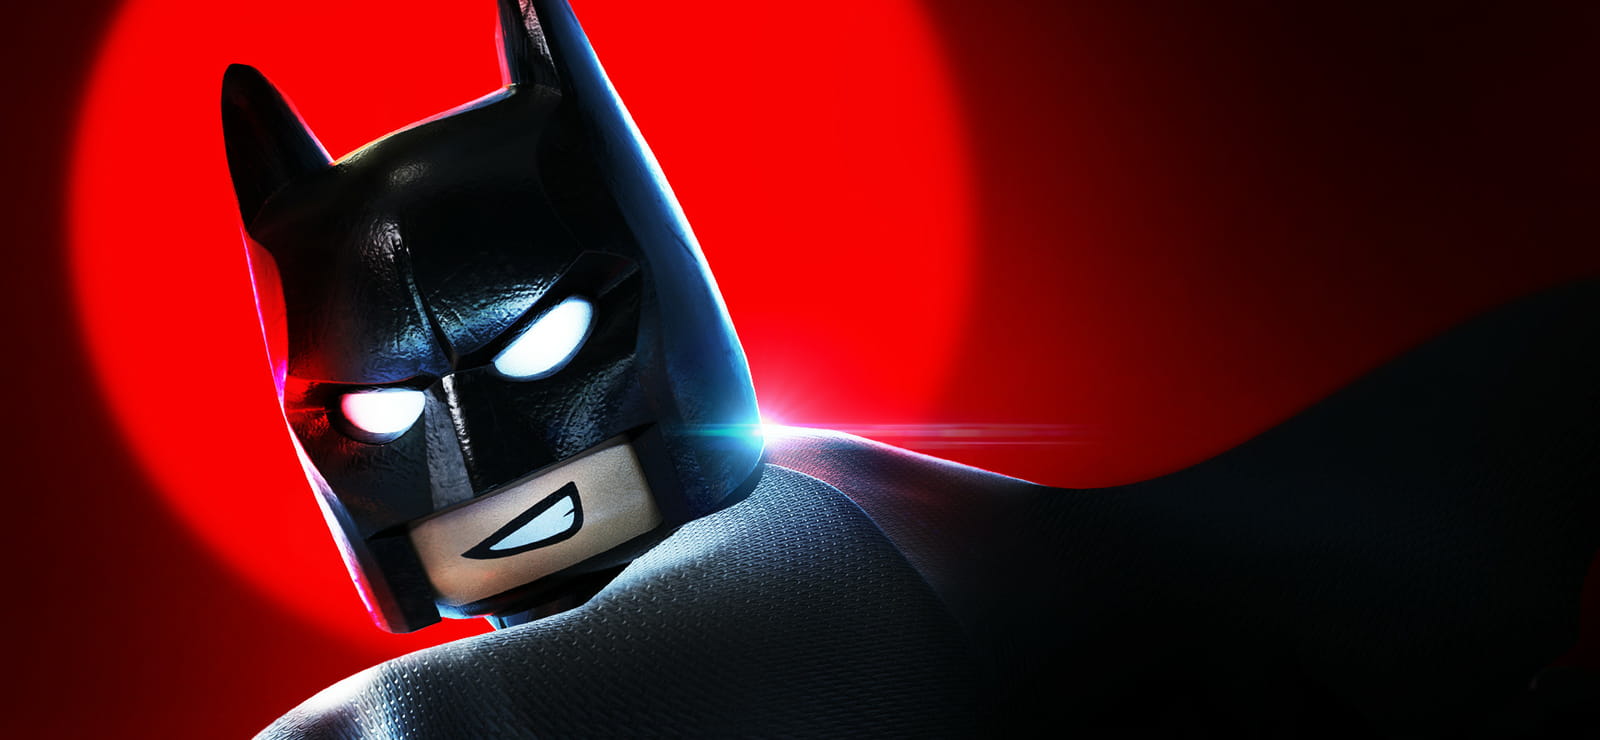 LEGO® DC Super-Villains Batman: The Animated Series Level Pack